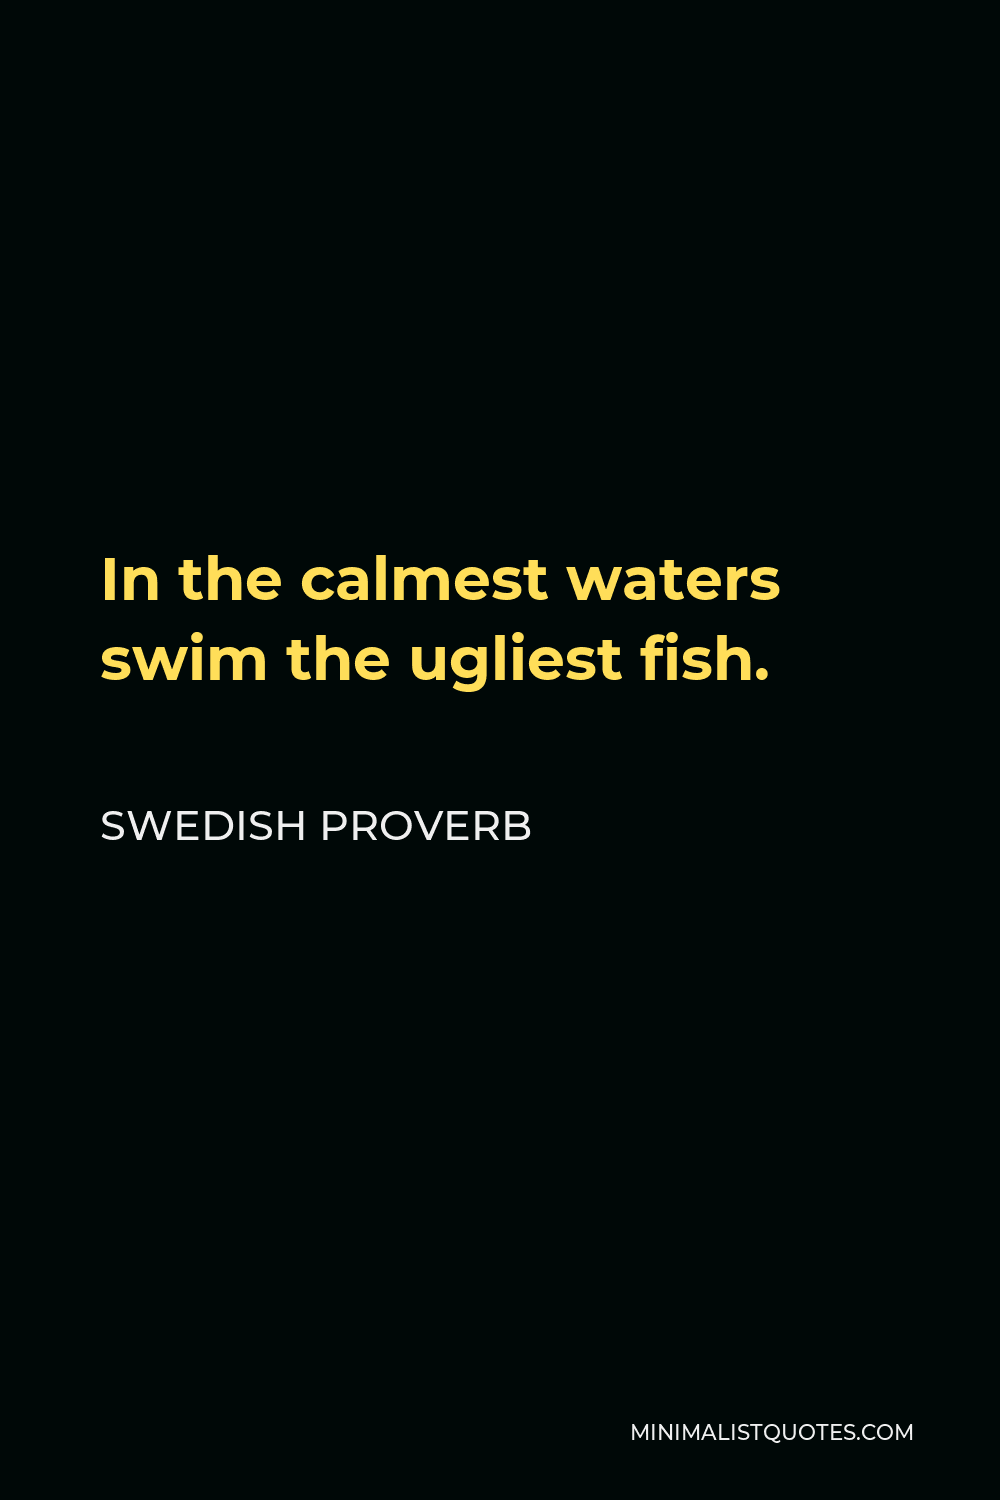 Swedish Proverb Quote - In the calmest waters swim the ugliest fish.